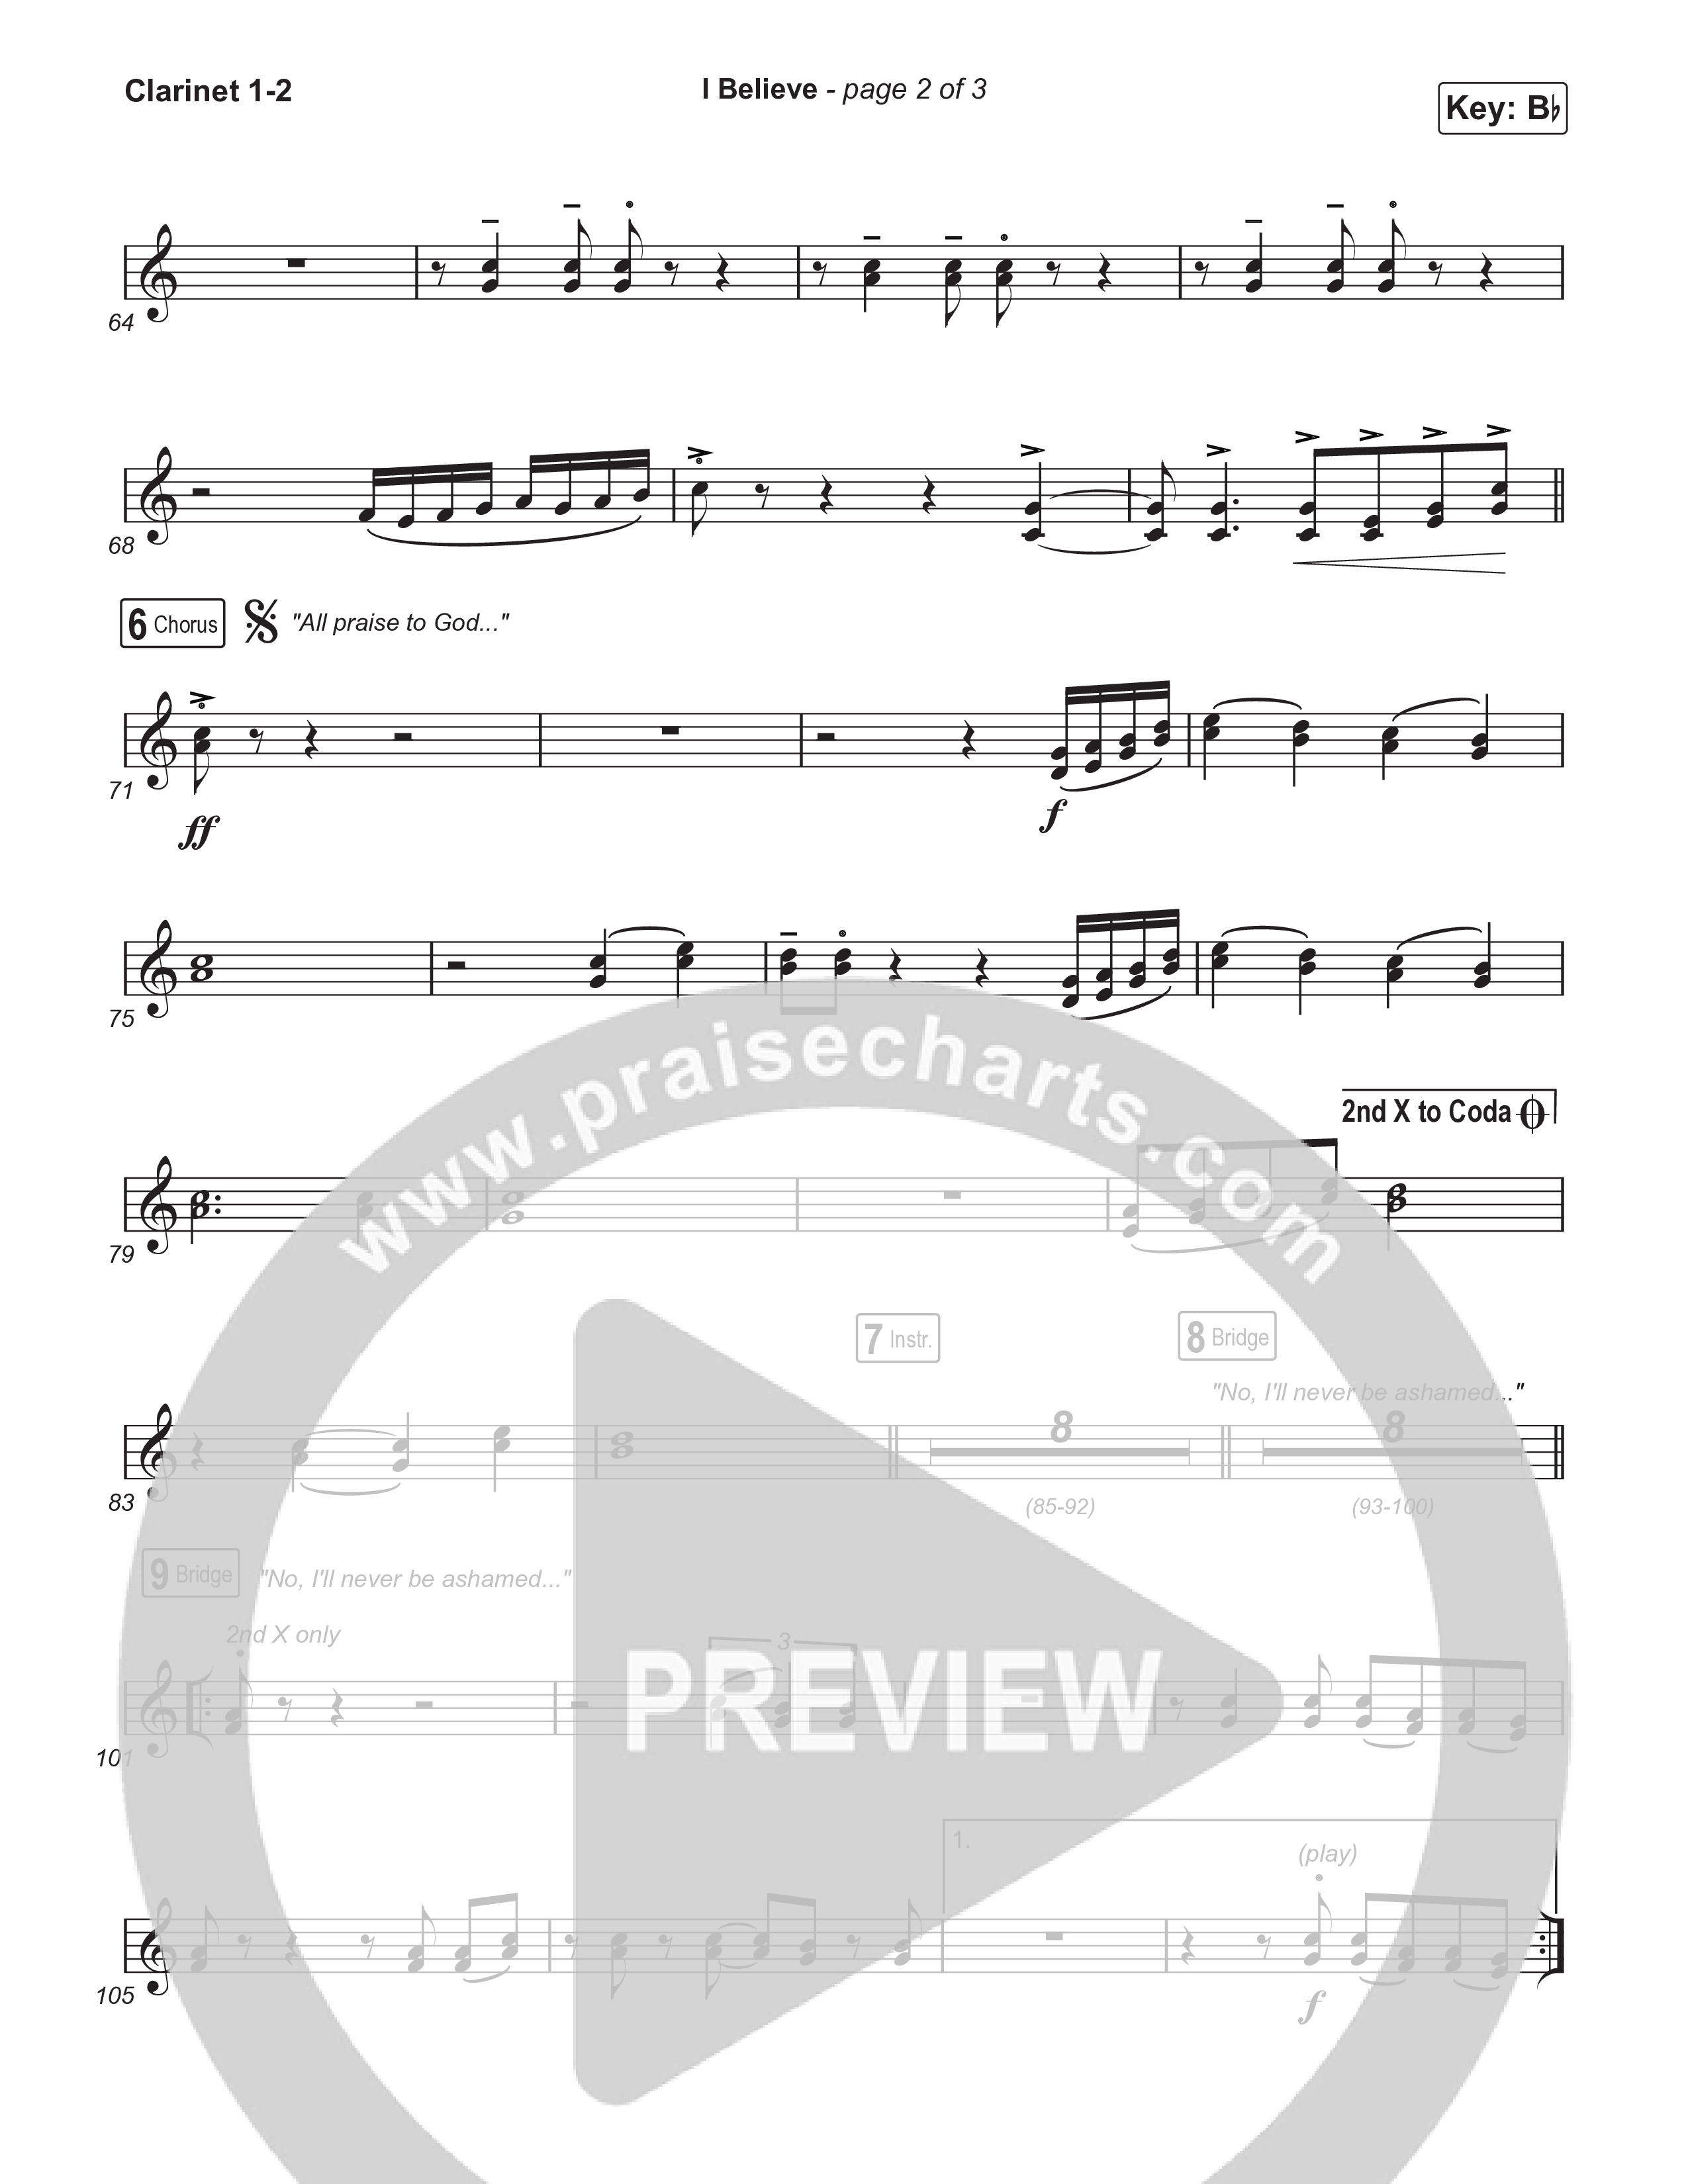 I Believe (Unison/2-Part) Clarinet 1/2 (Phil Wickham)